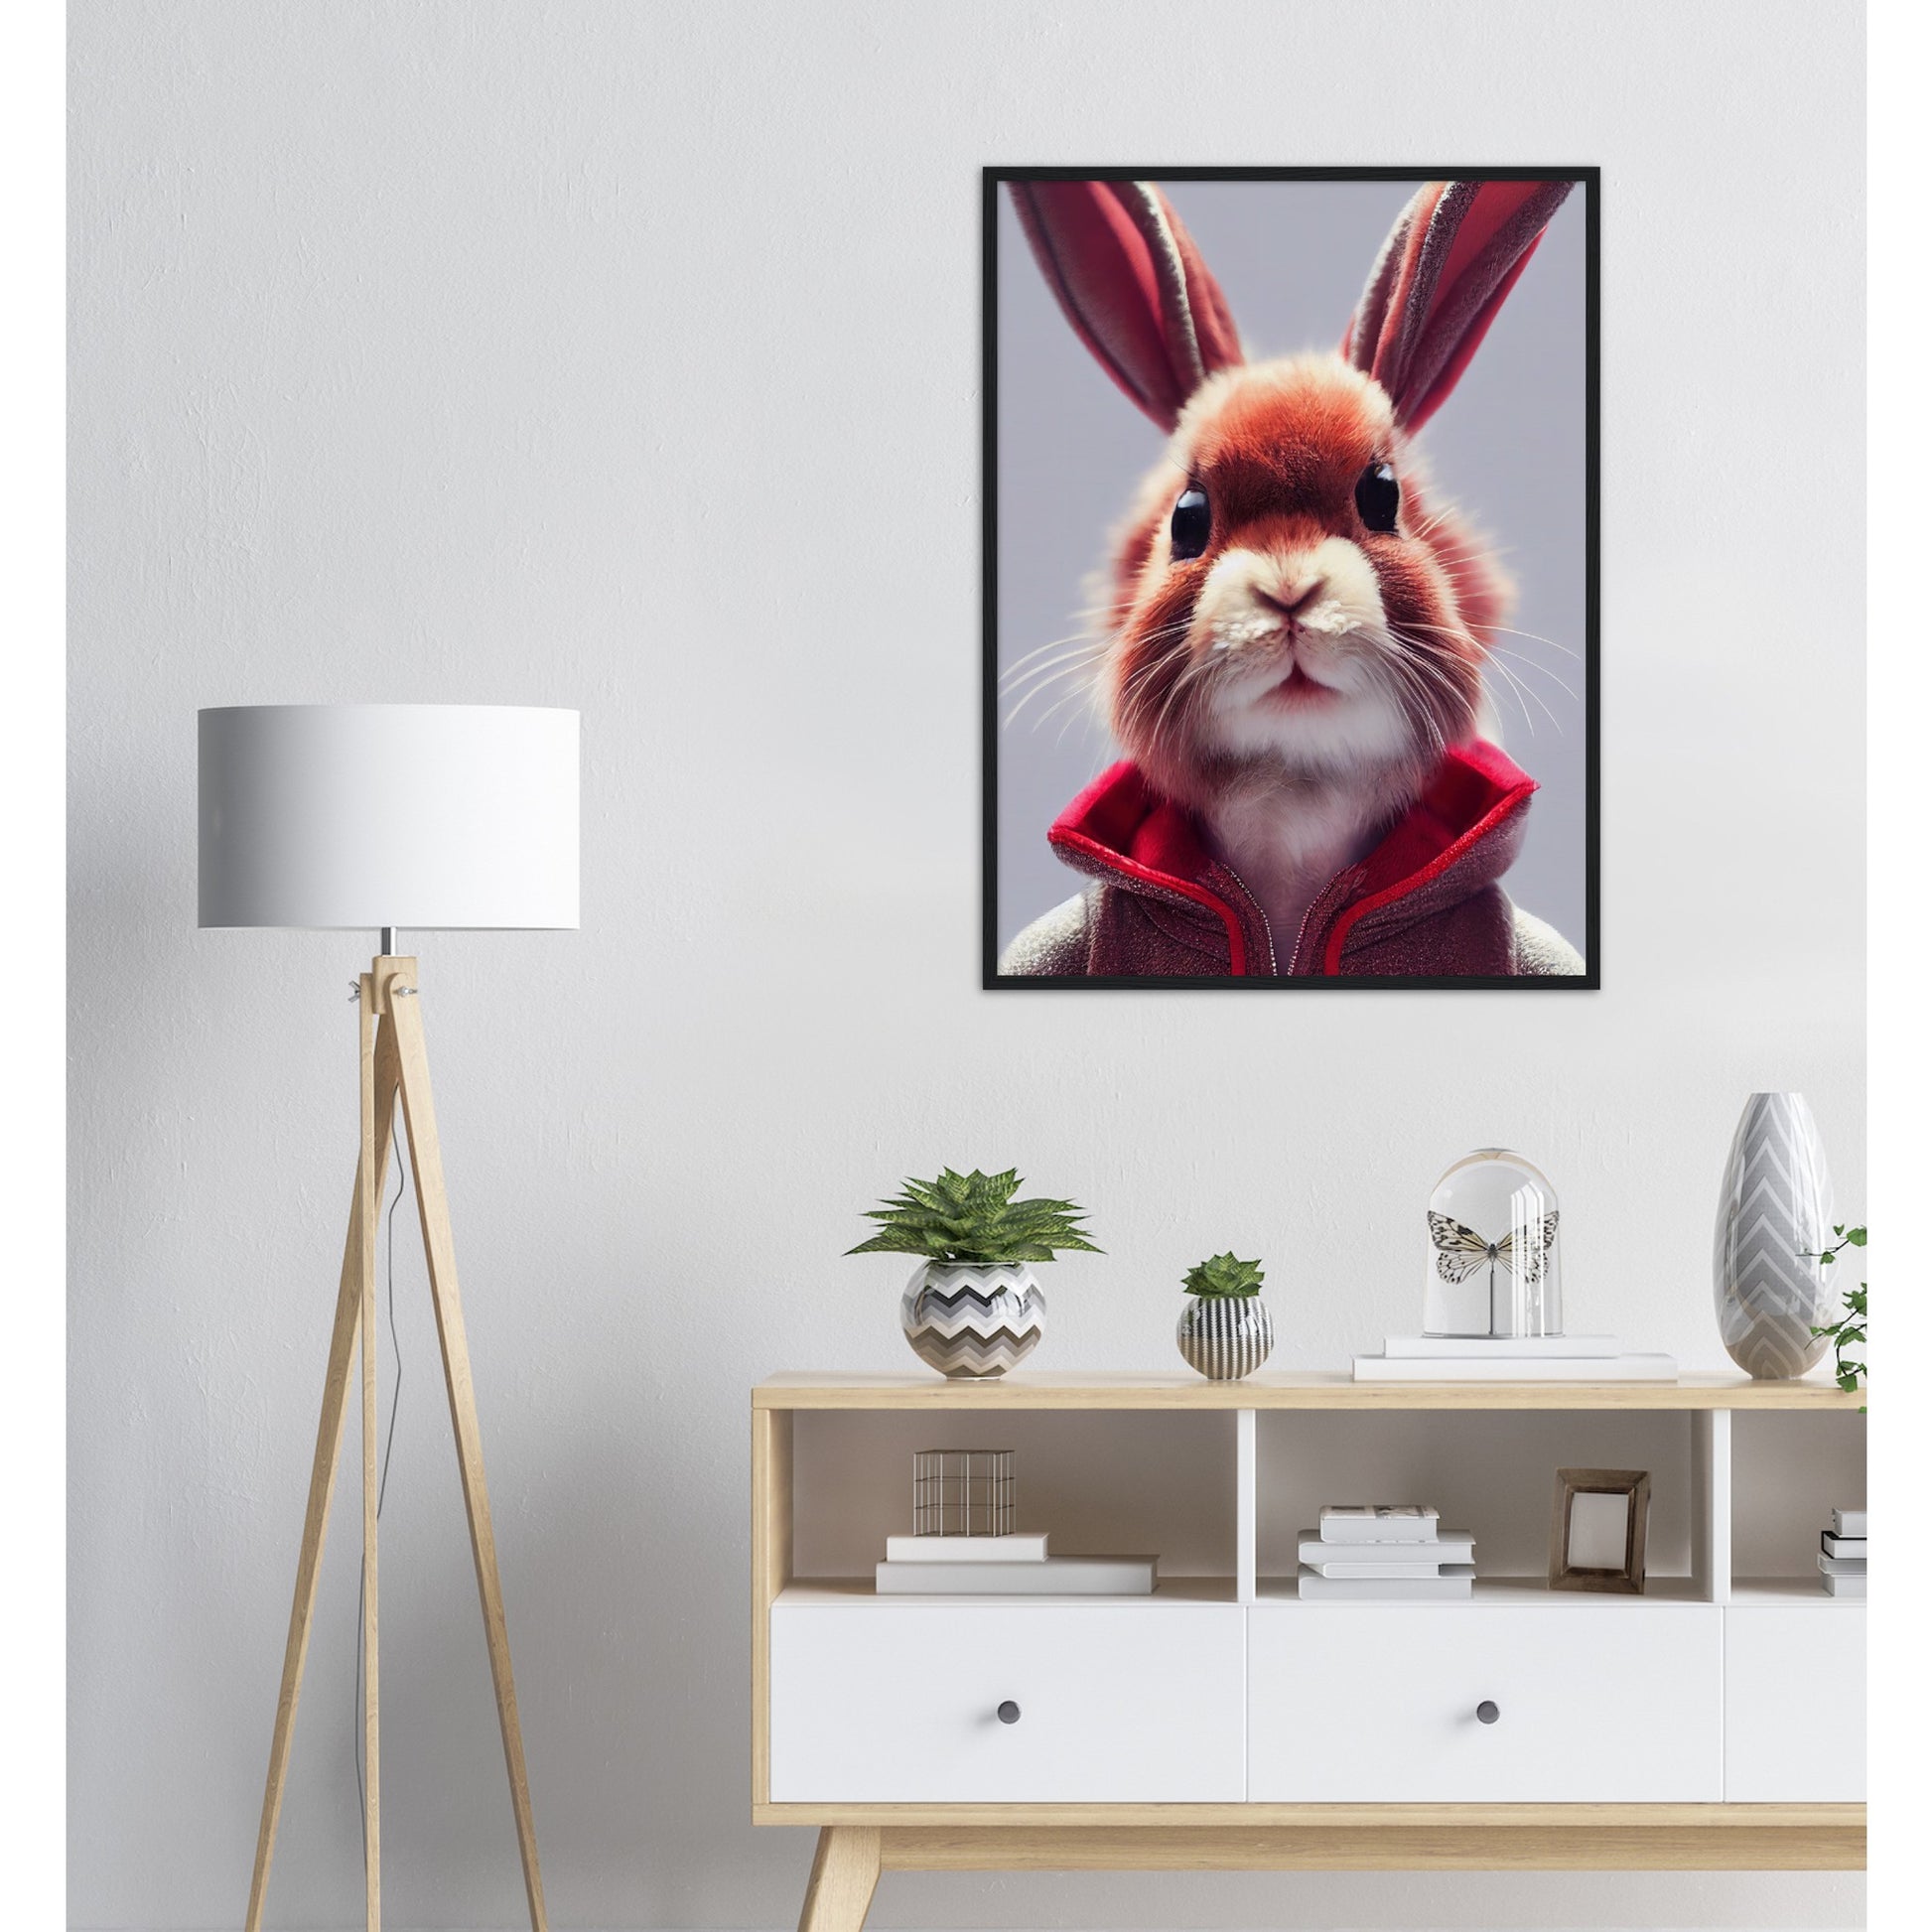 Poster mit Rahmen (Holz)- Museumsqualität - Bunny in grey red tracksuit - "Julius" - personalized mug - customized mug - Cute rabbit - Marke:- Pixelboys - Brand - Art Prints - Marke - Wandkunst - Papierstärke: 250g/qm - Wall Art - Bunny crey - Skater Betty - Hasen Gang - Original - Künstler:Pixelboys - Poster with frame - Office Poster - Trend - Wandschmuck - Atelier USA - 